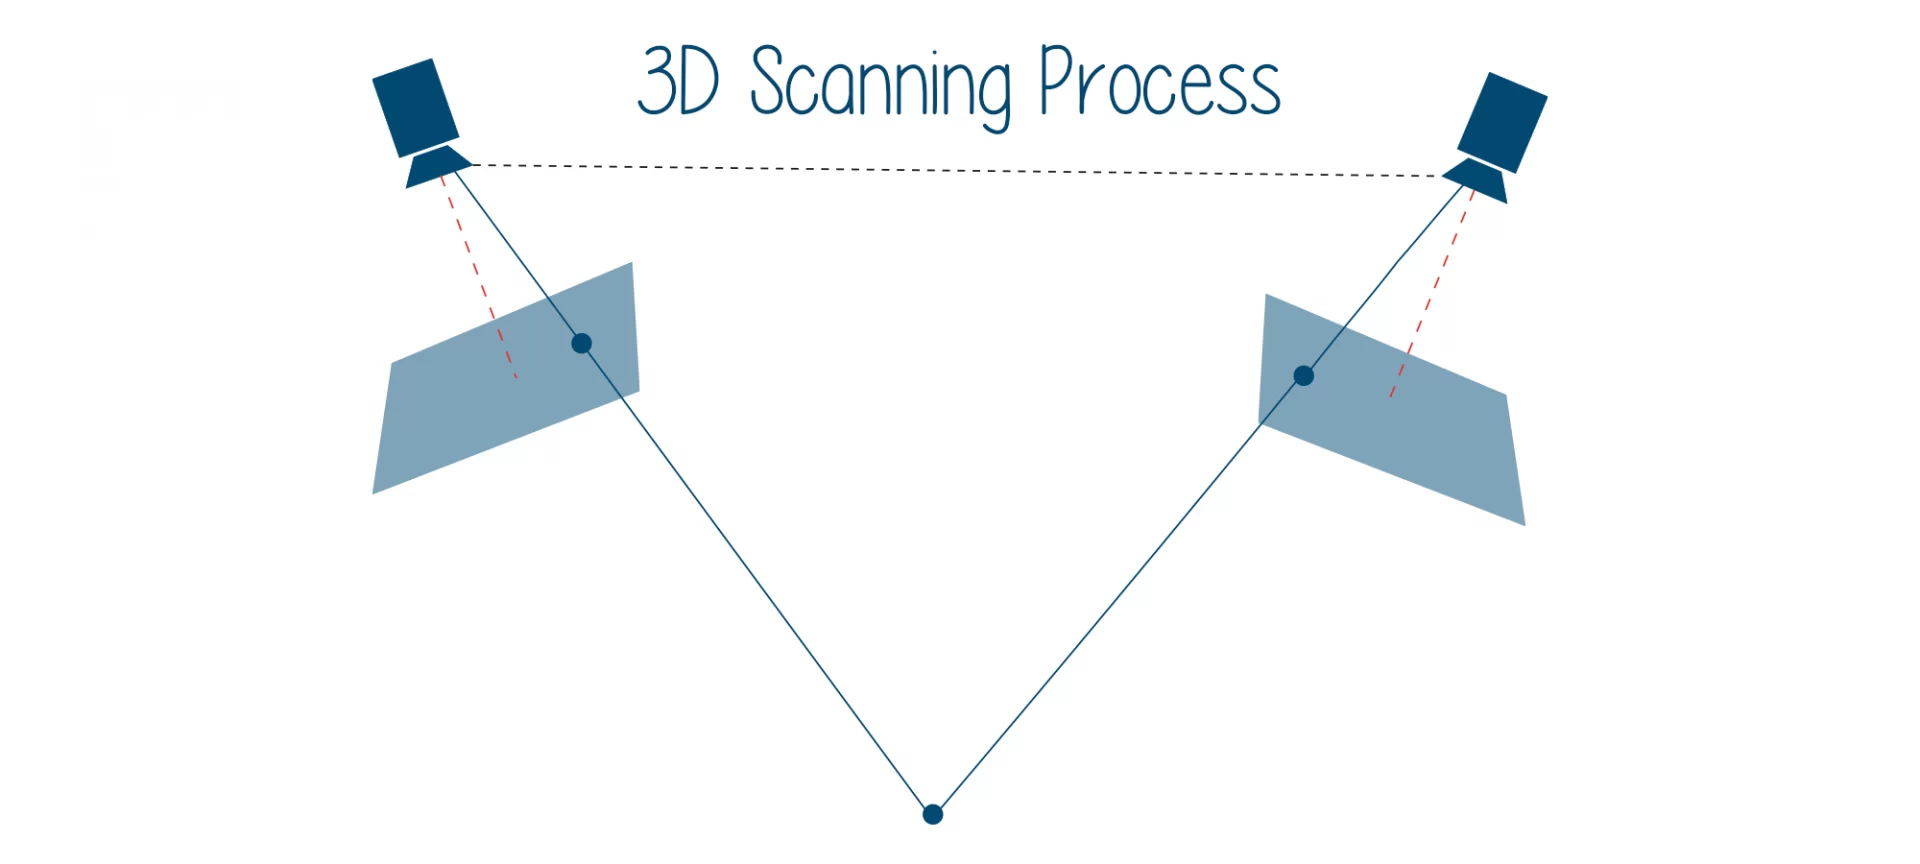 3D scanning process